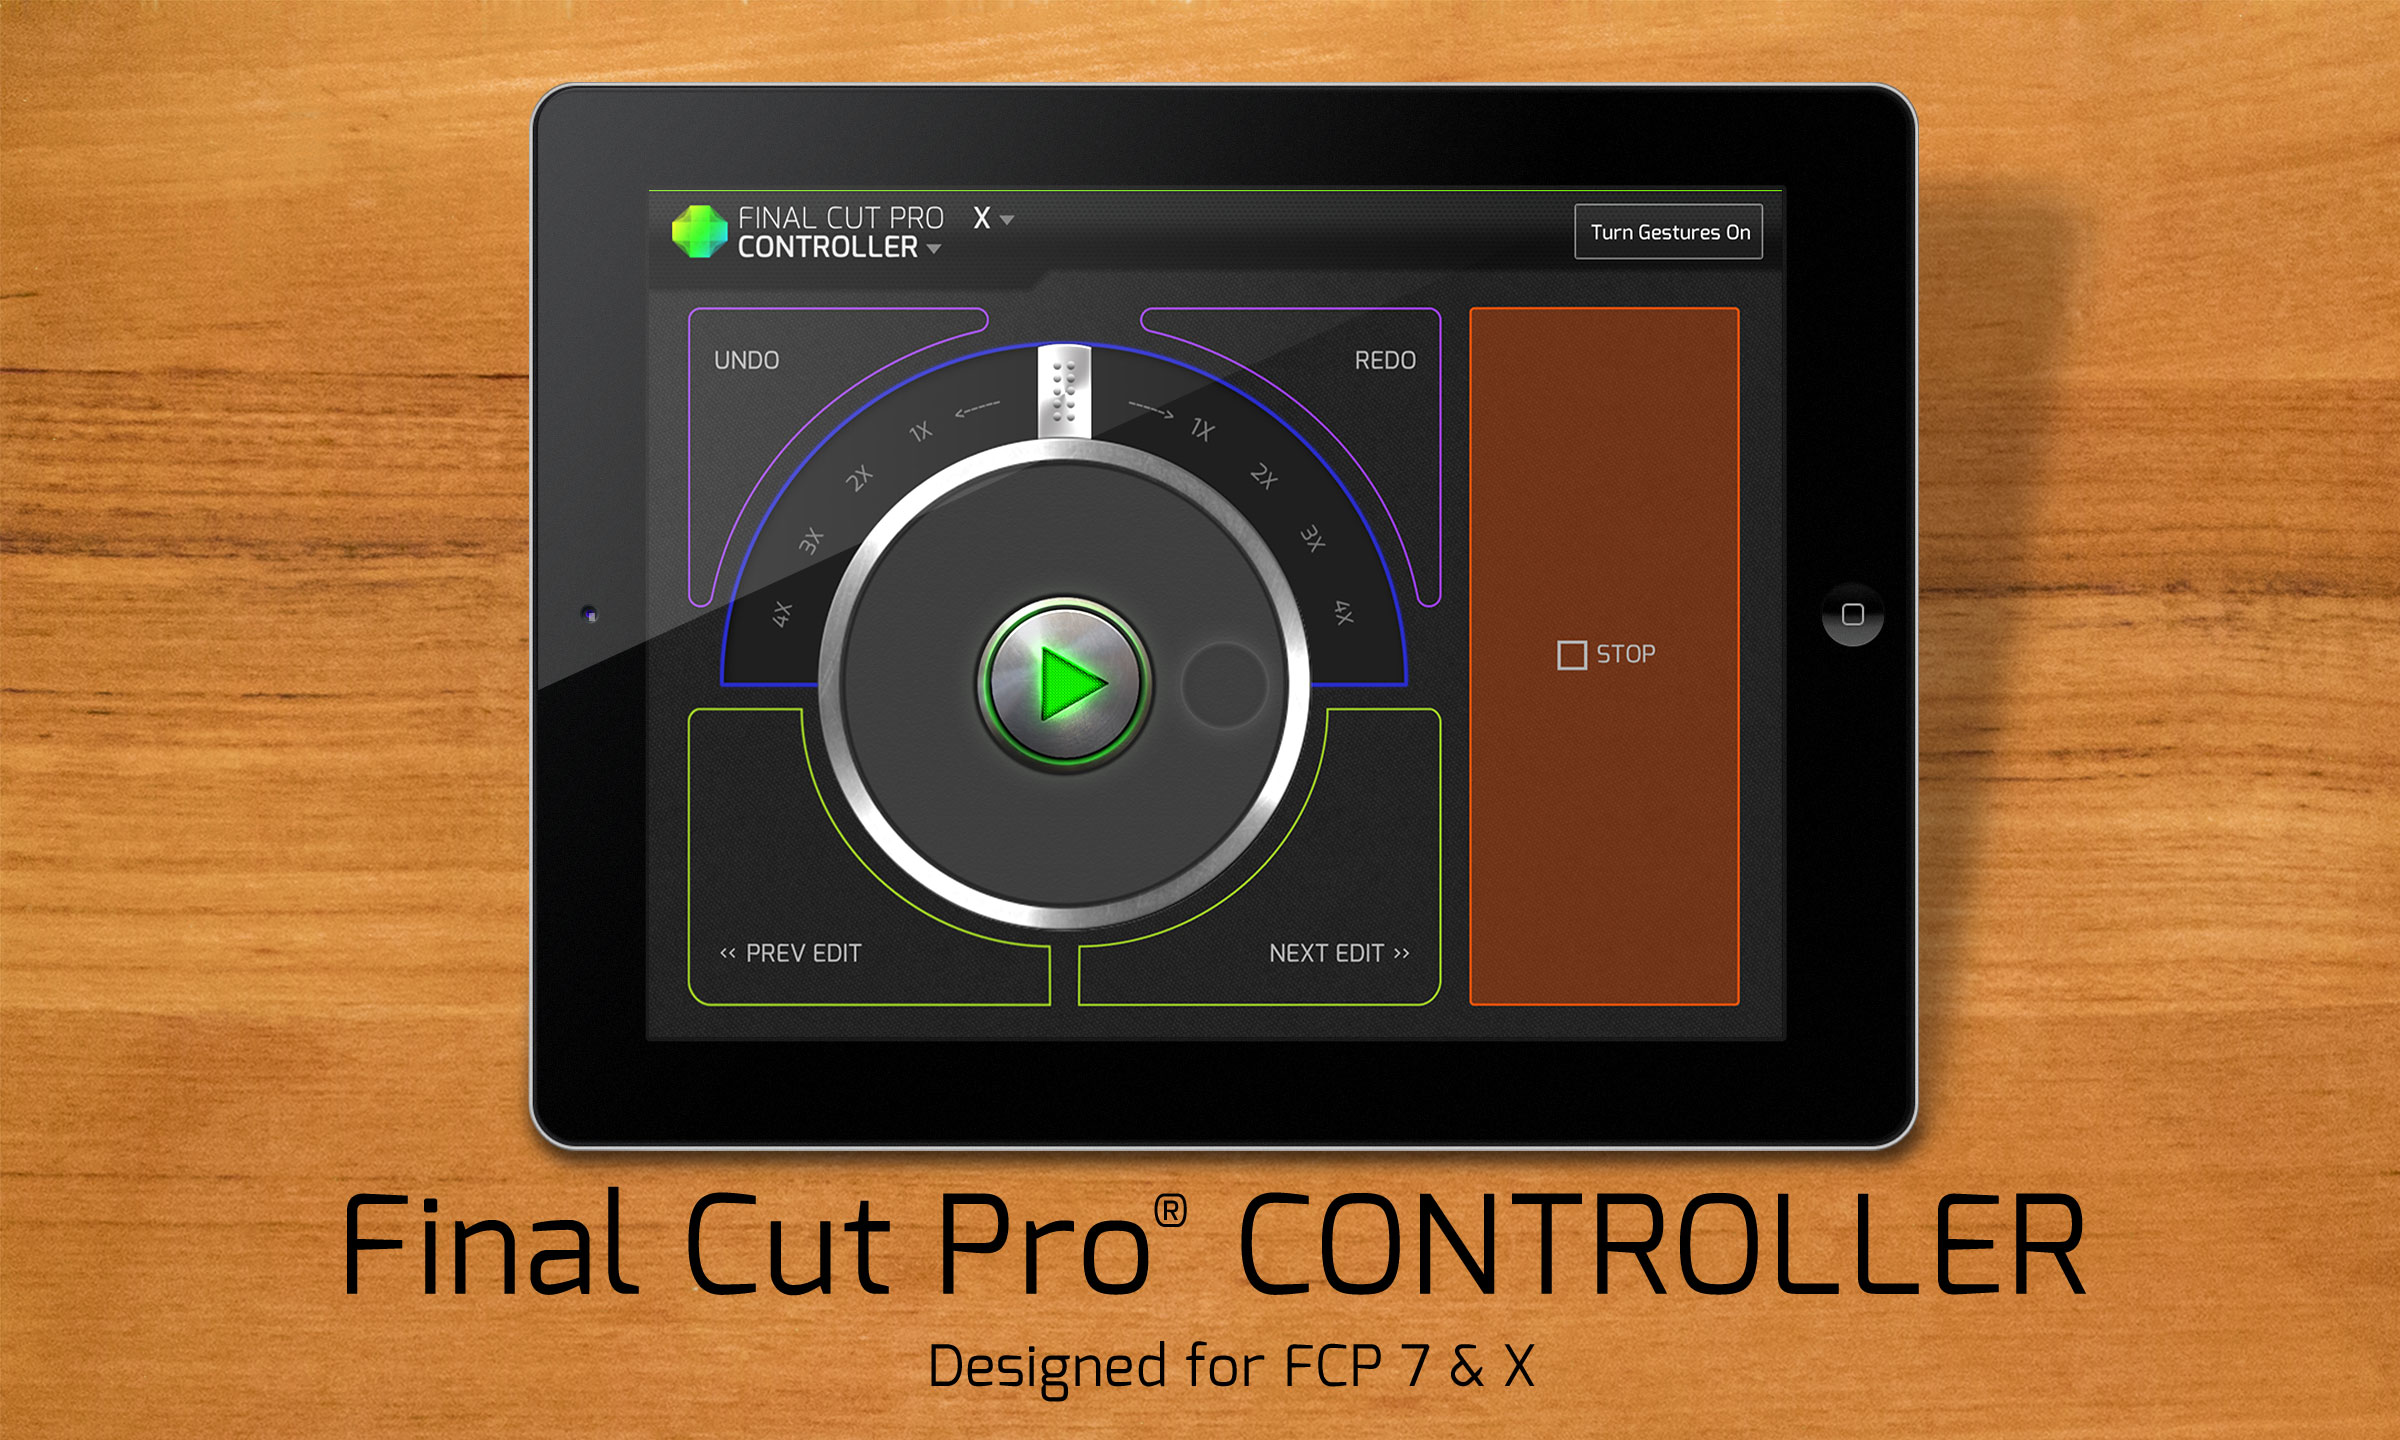 Console: Final Cut Pro CONTROLLER